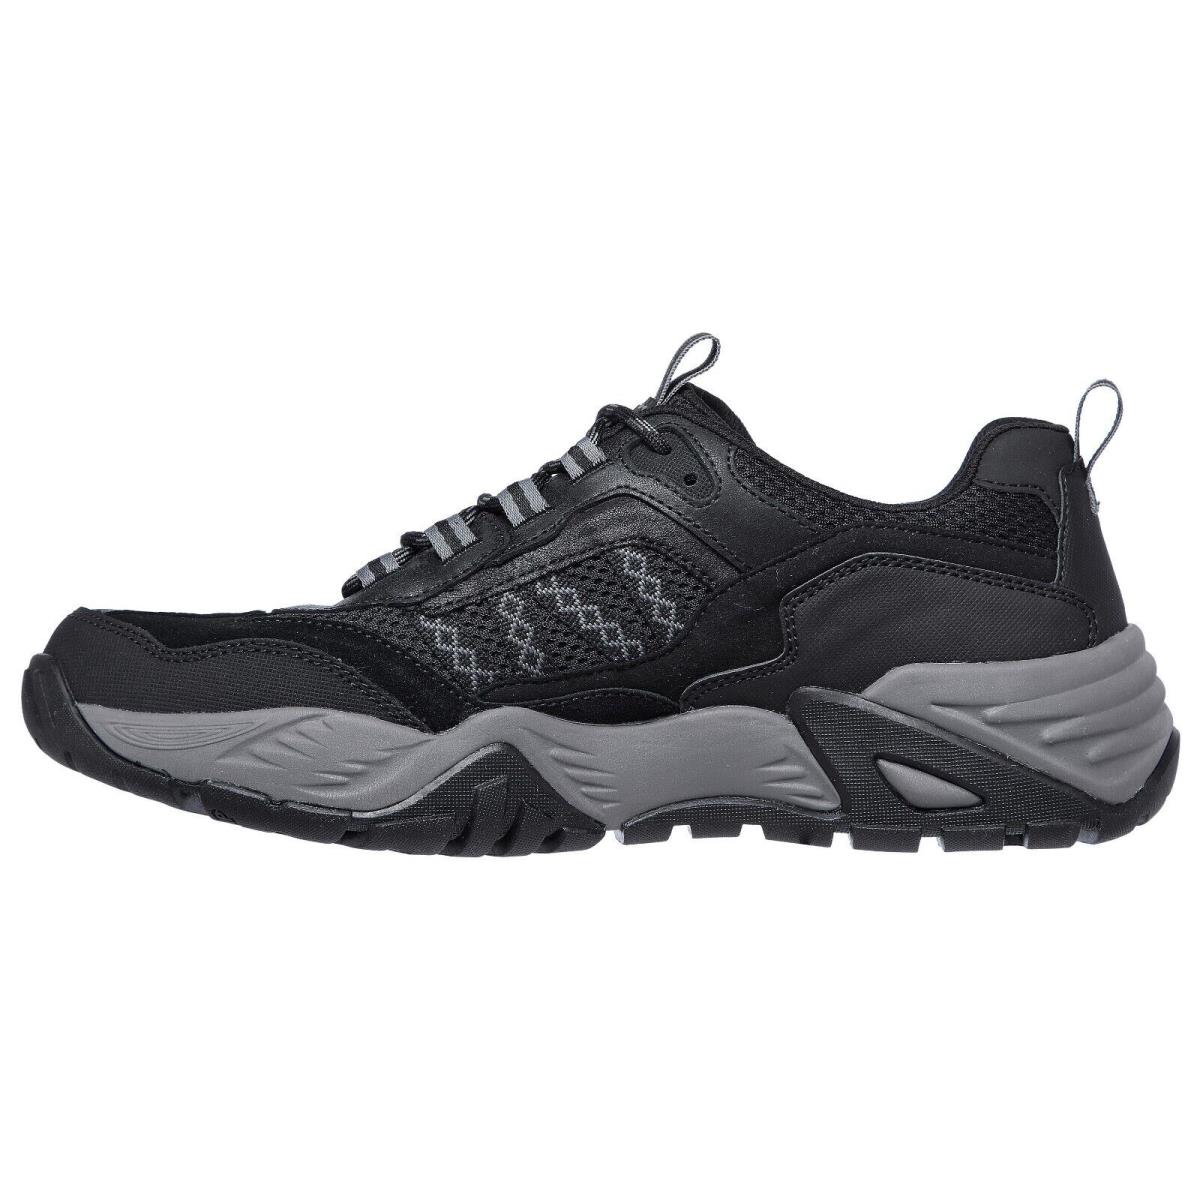 Skechers shoes Recon Jericko - Black 7